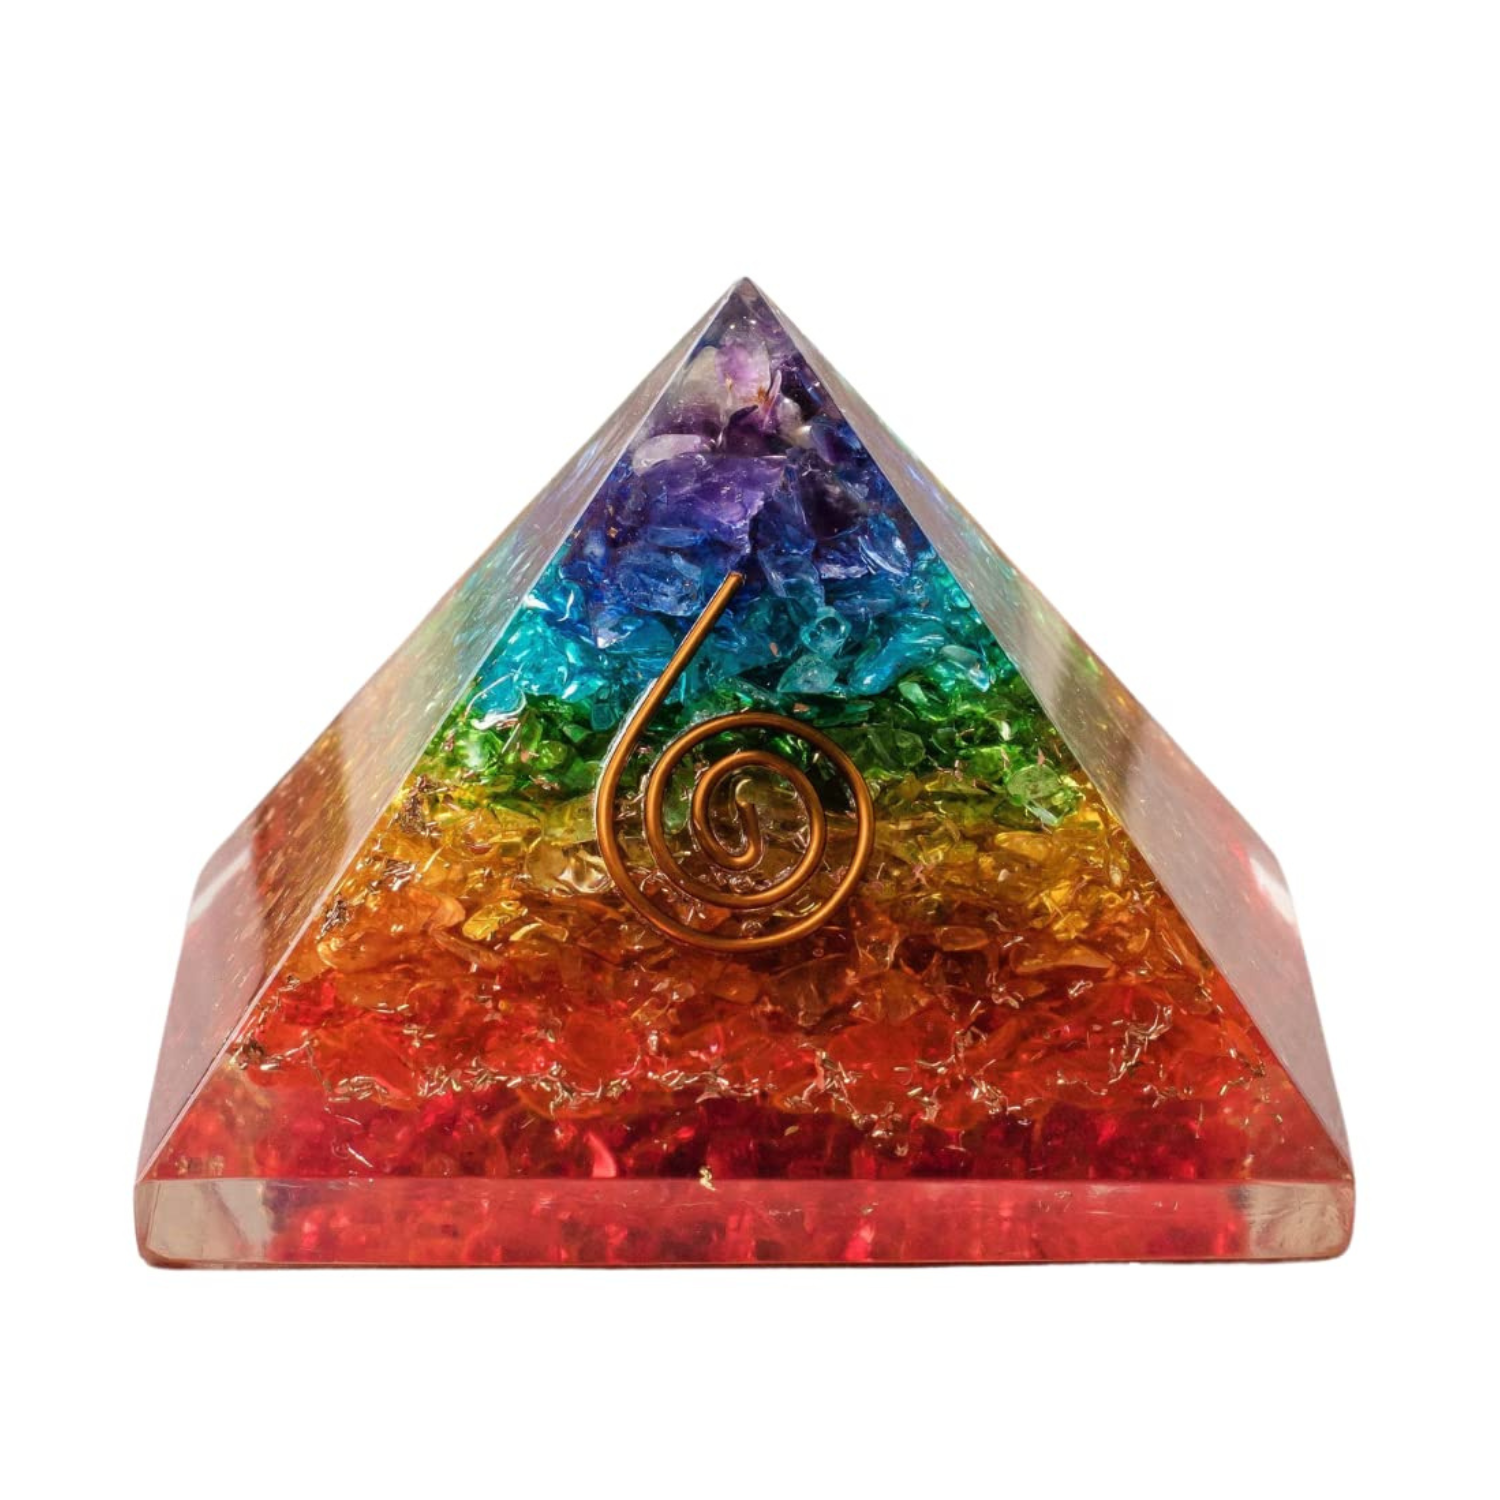 Crystal Orgone Pyramid for Balancing Energies - Protection and Harmony